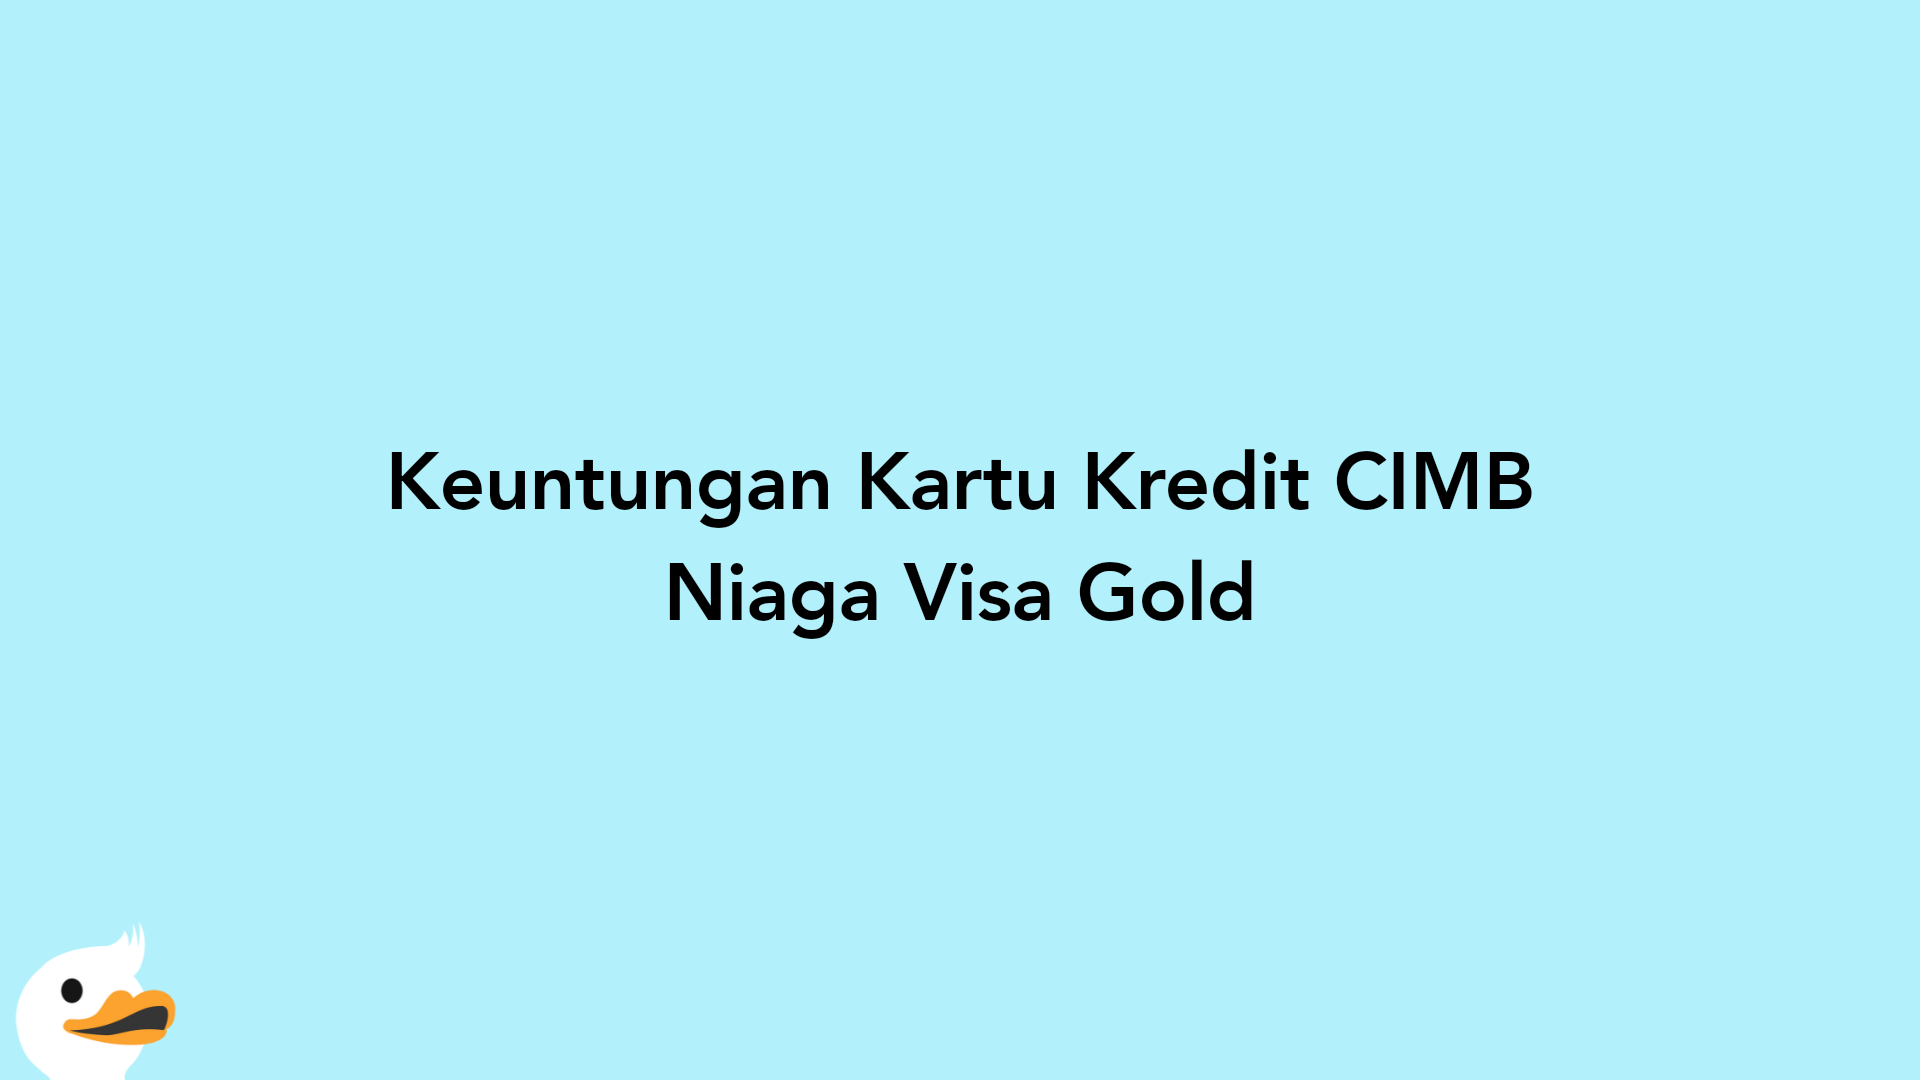 Keuntungan Kartu Kredit CIMB Niaga Visa Gold